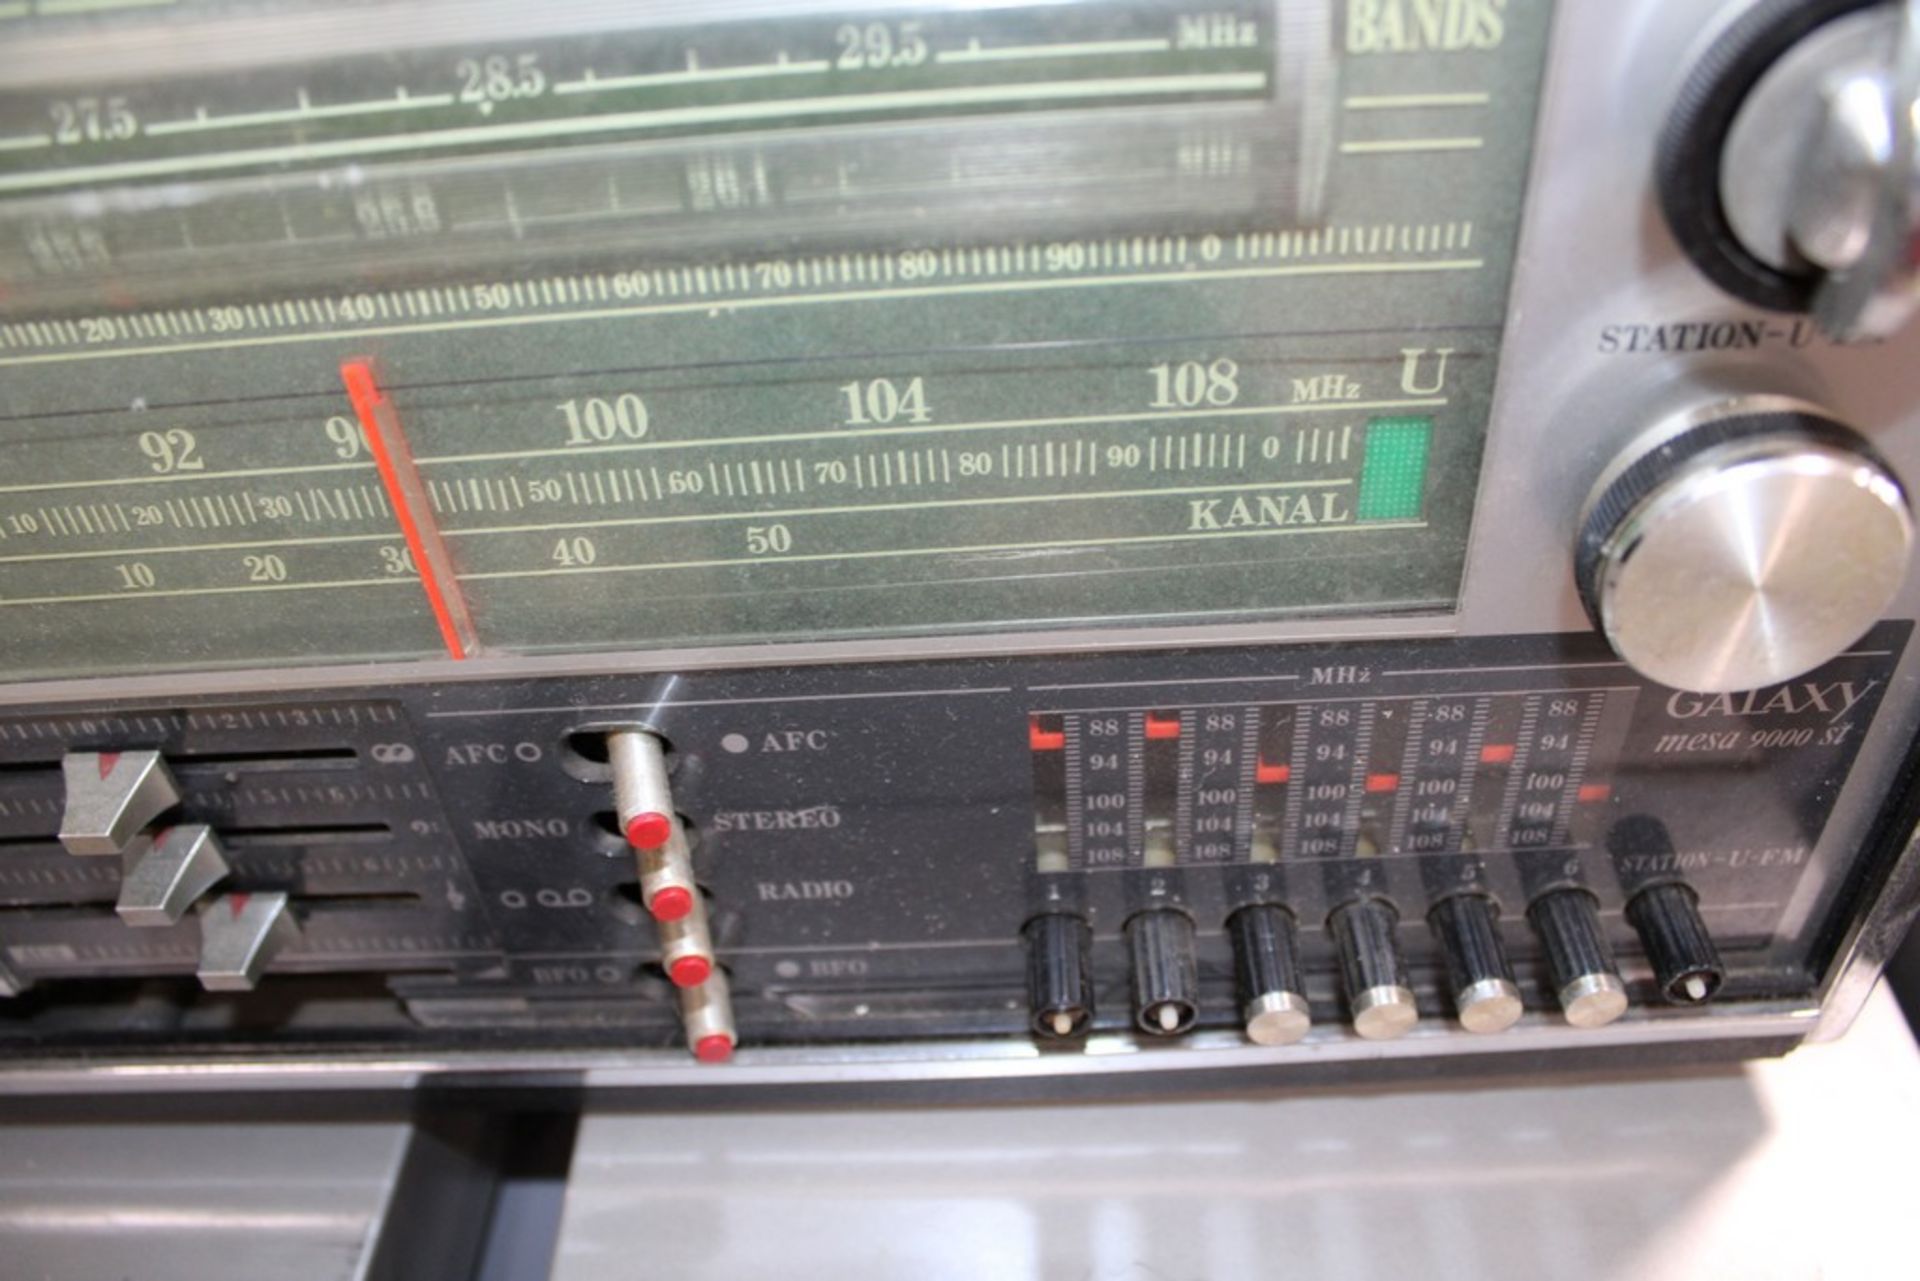 NORDMENDE GALAXY MESA 9000 MULTI-BAND RADIO (MISSING KNOB) - Image 2 of 4